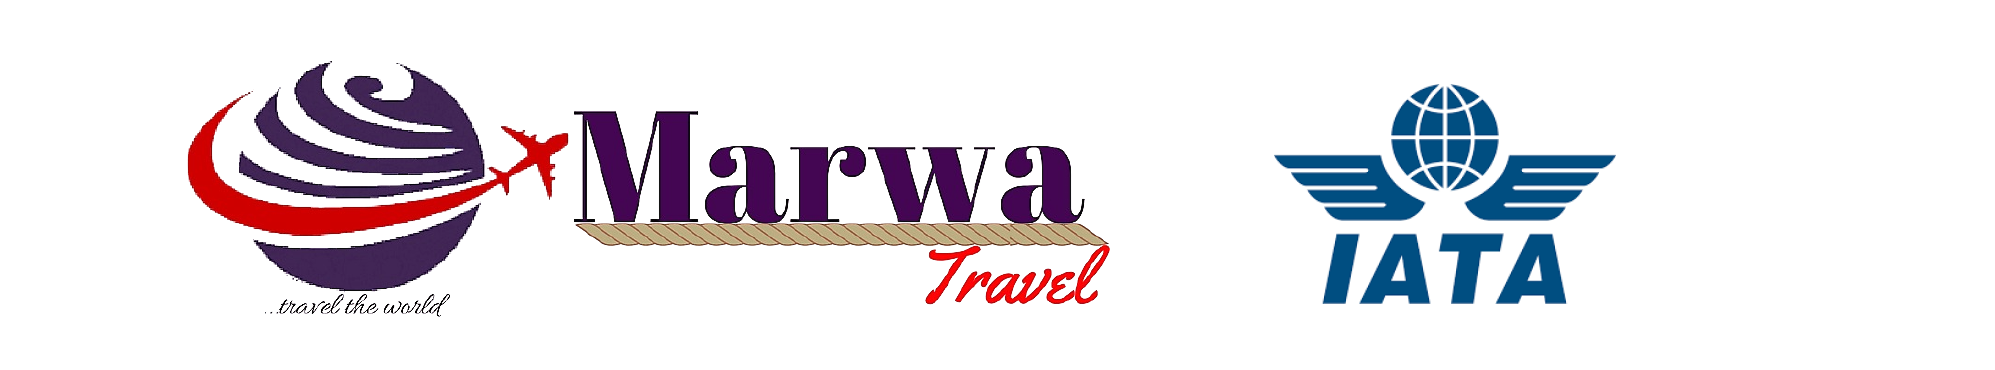 Marwa Travels